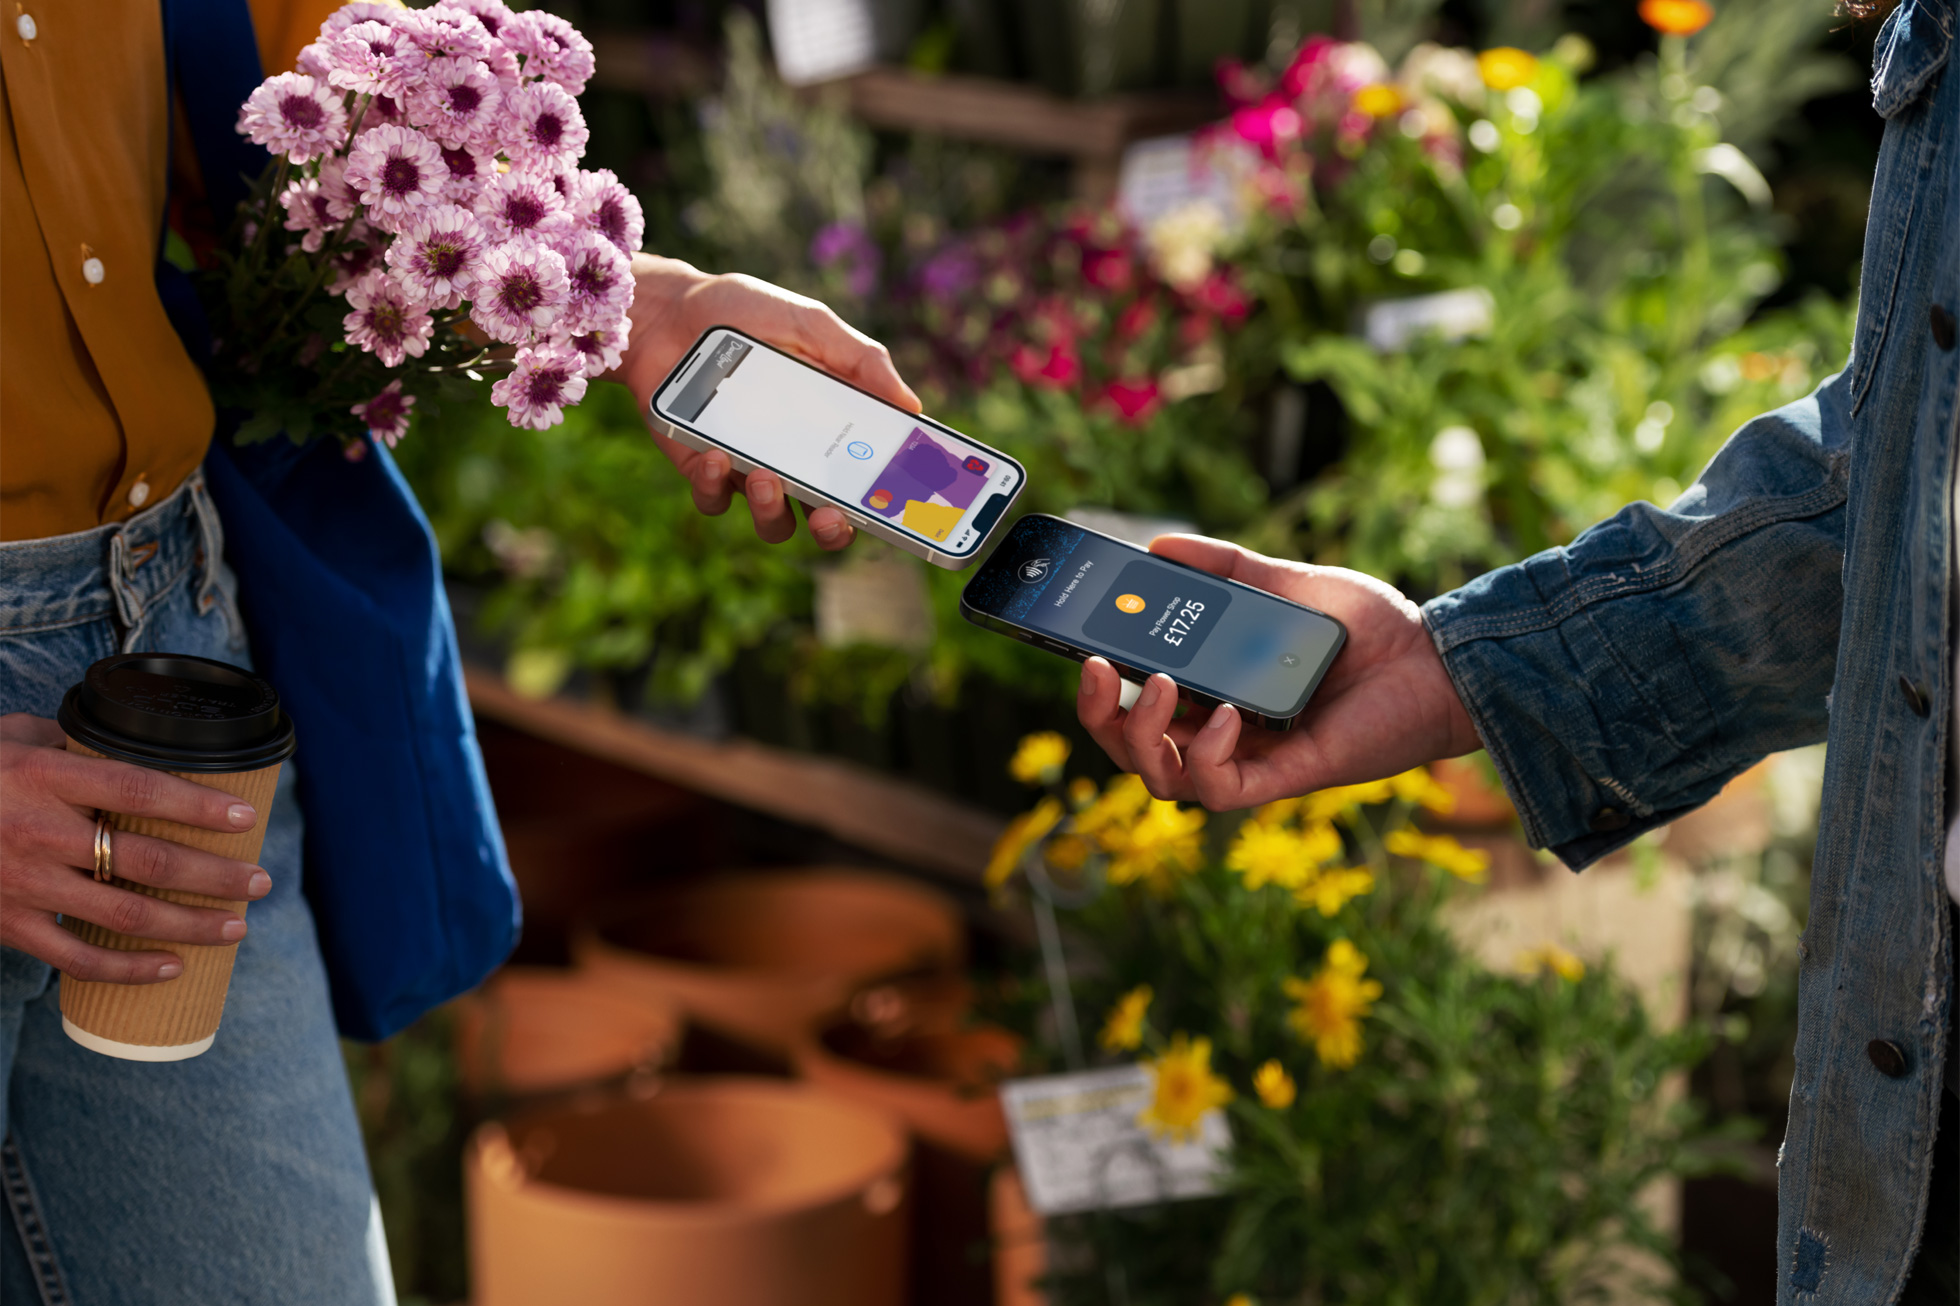 Podrá realizar pagos instantáneos entre teléfonos inteligentes usando Tap to Pay